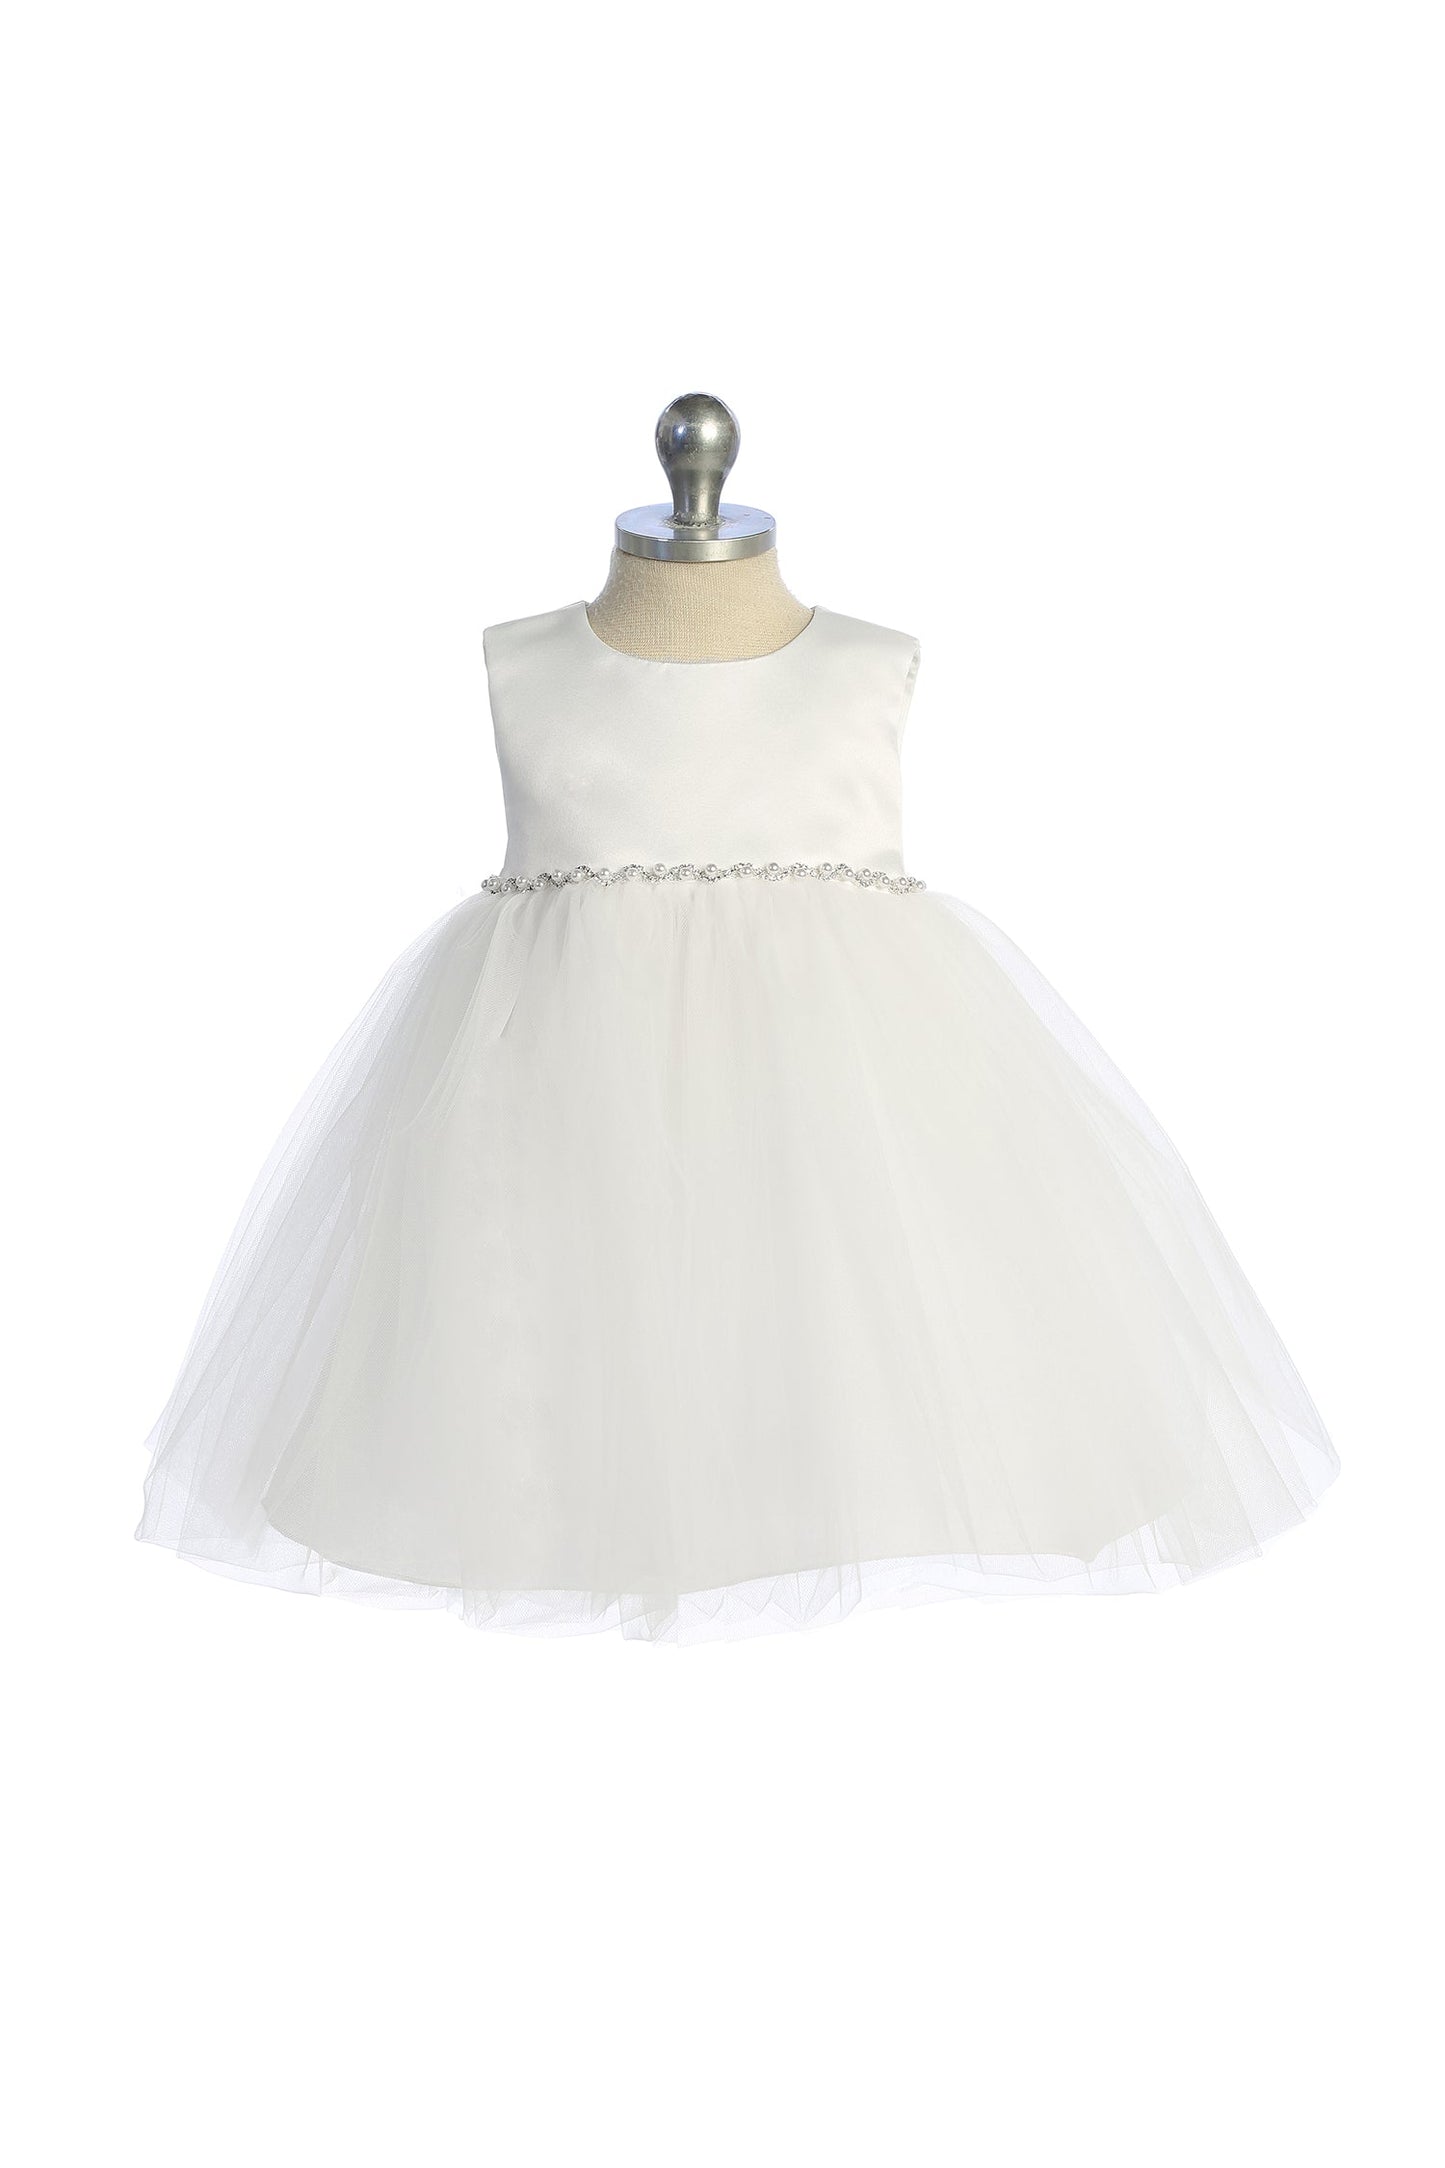 Dress - Satin Top Baby Dress W/ Rhinestones & Pearls